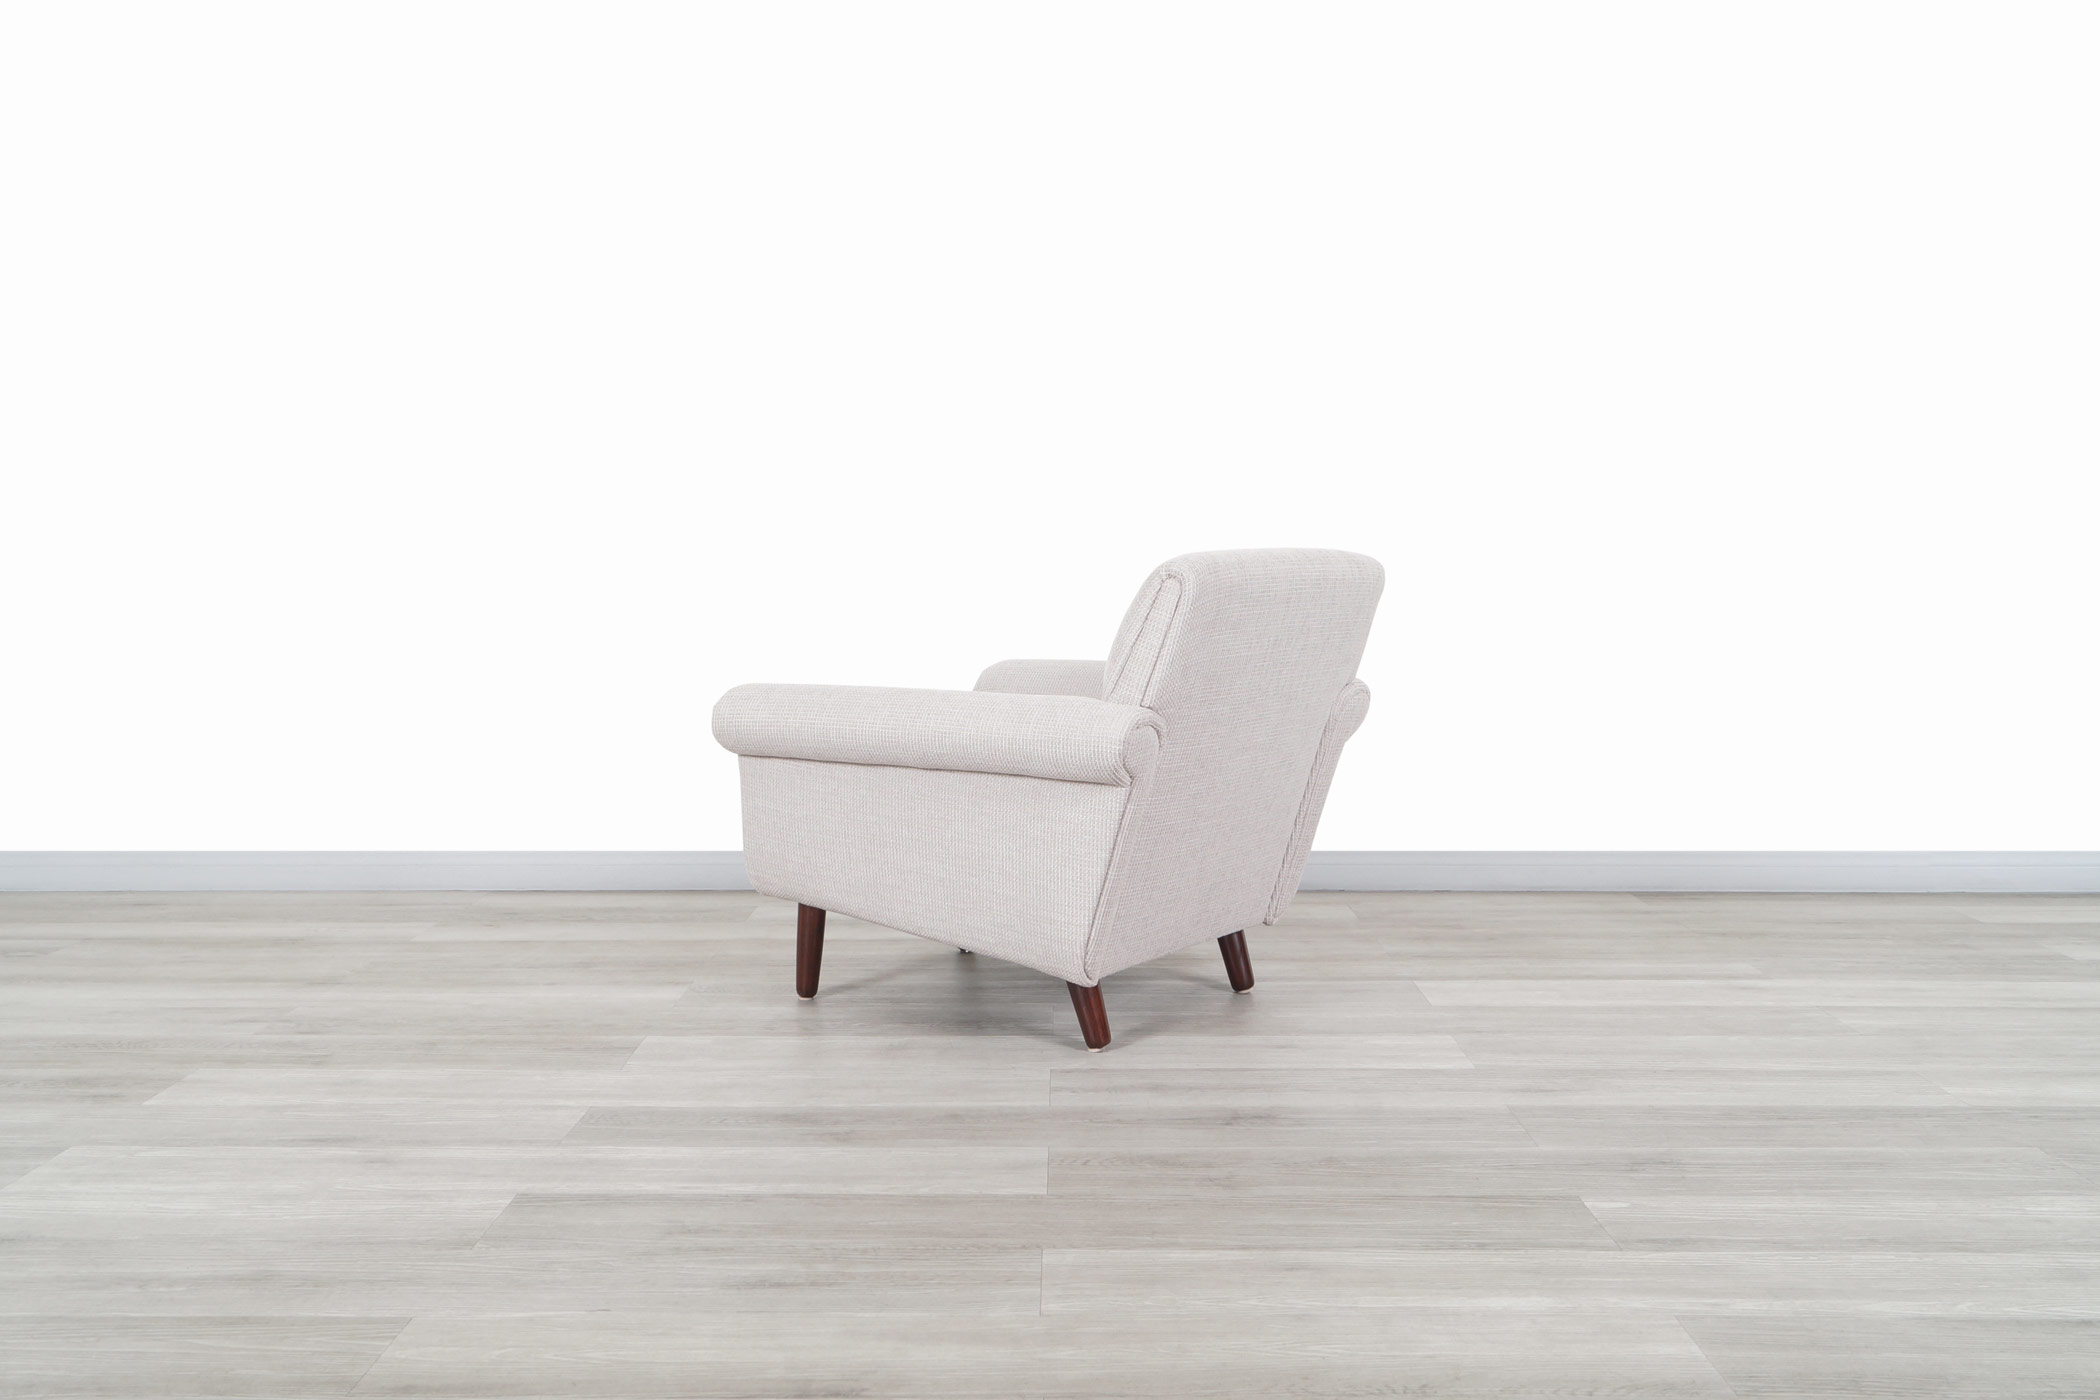 Danish Modern Rosewood Lounge Chairs